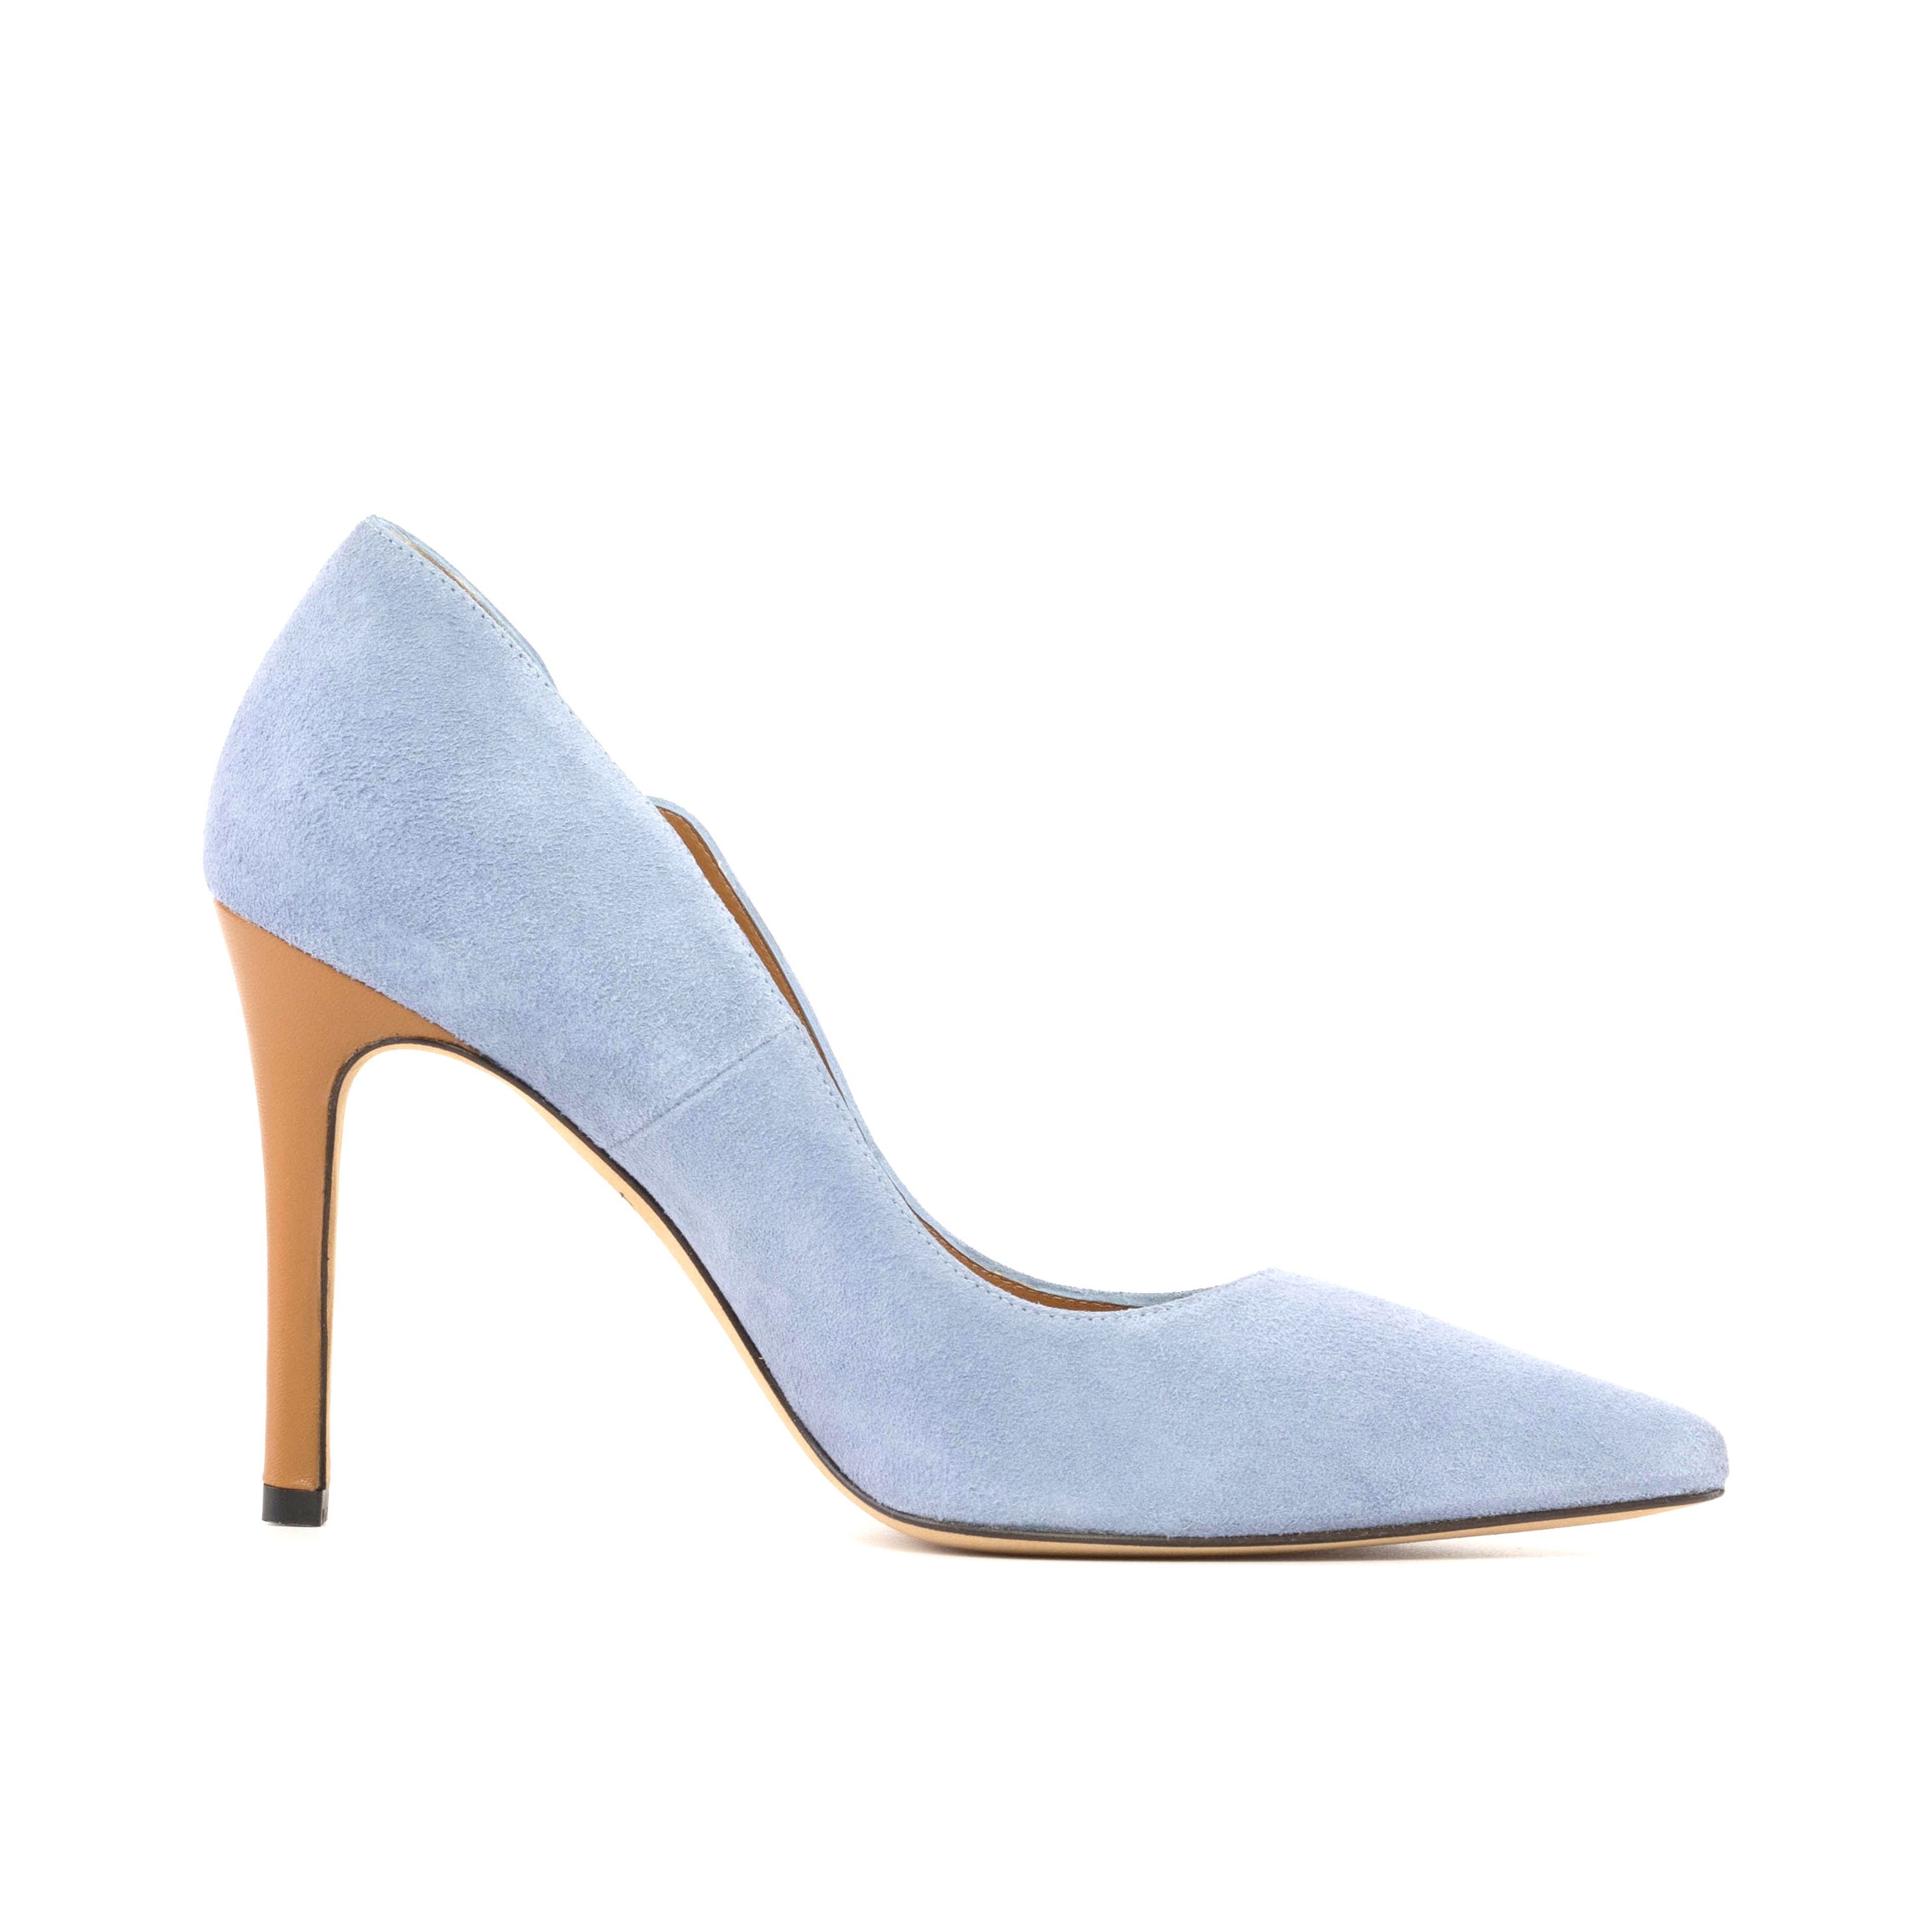 Anna Field Classic heels - light blue - Zalando.co.uk